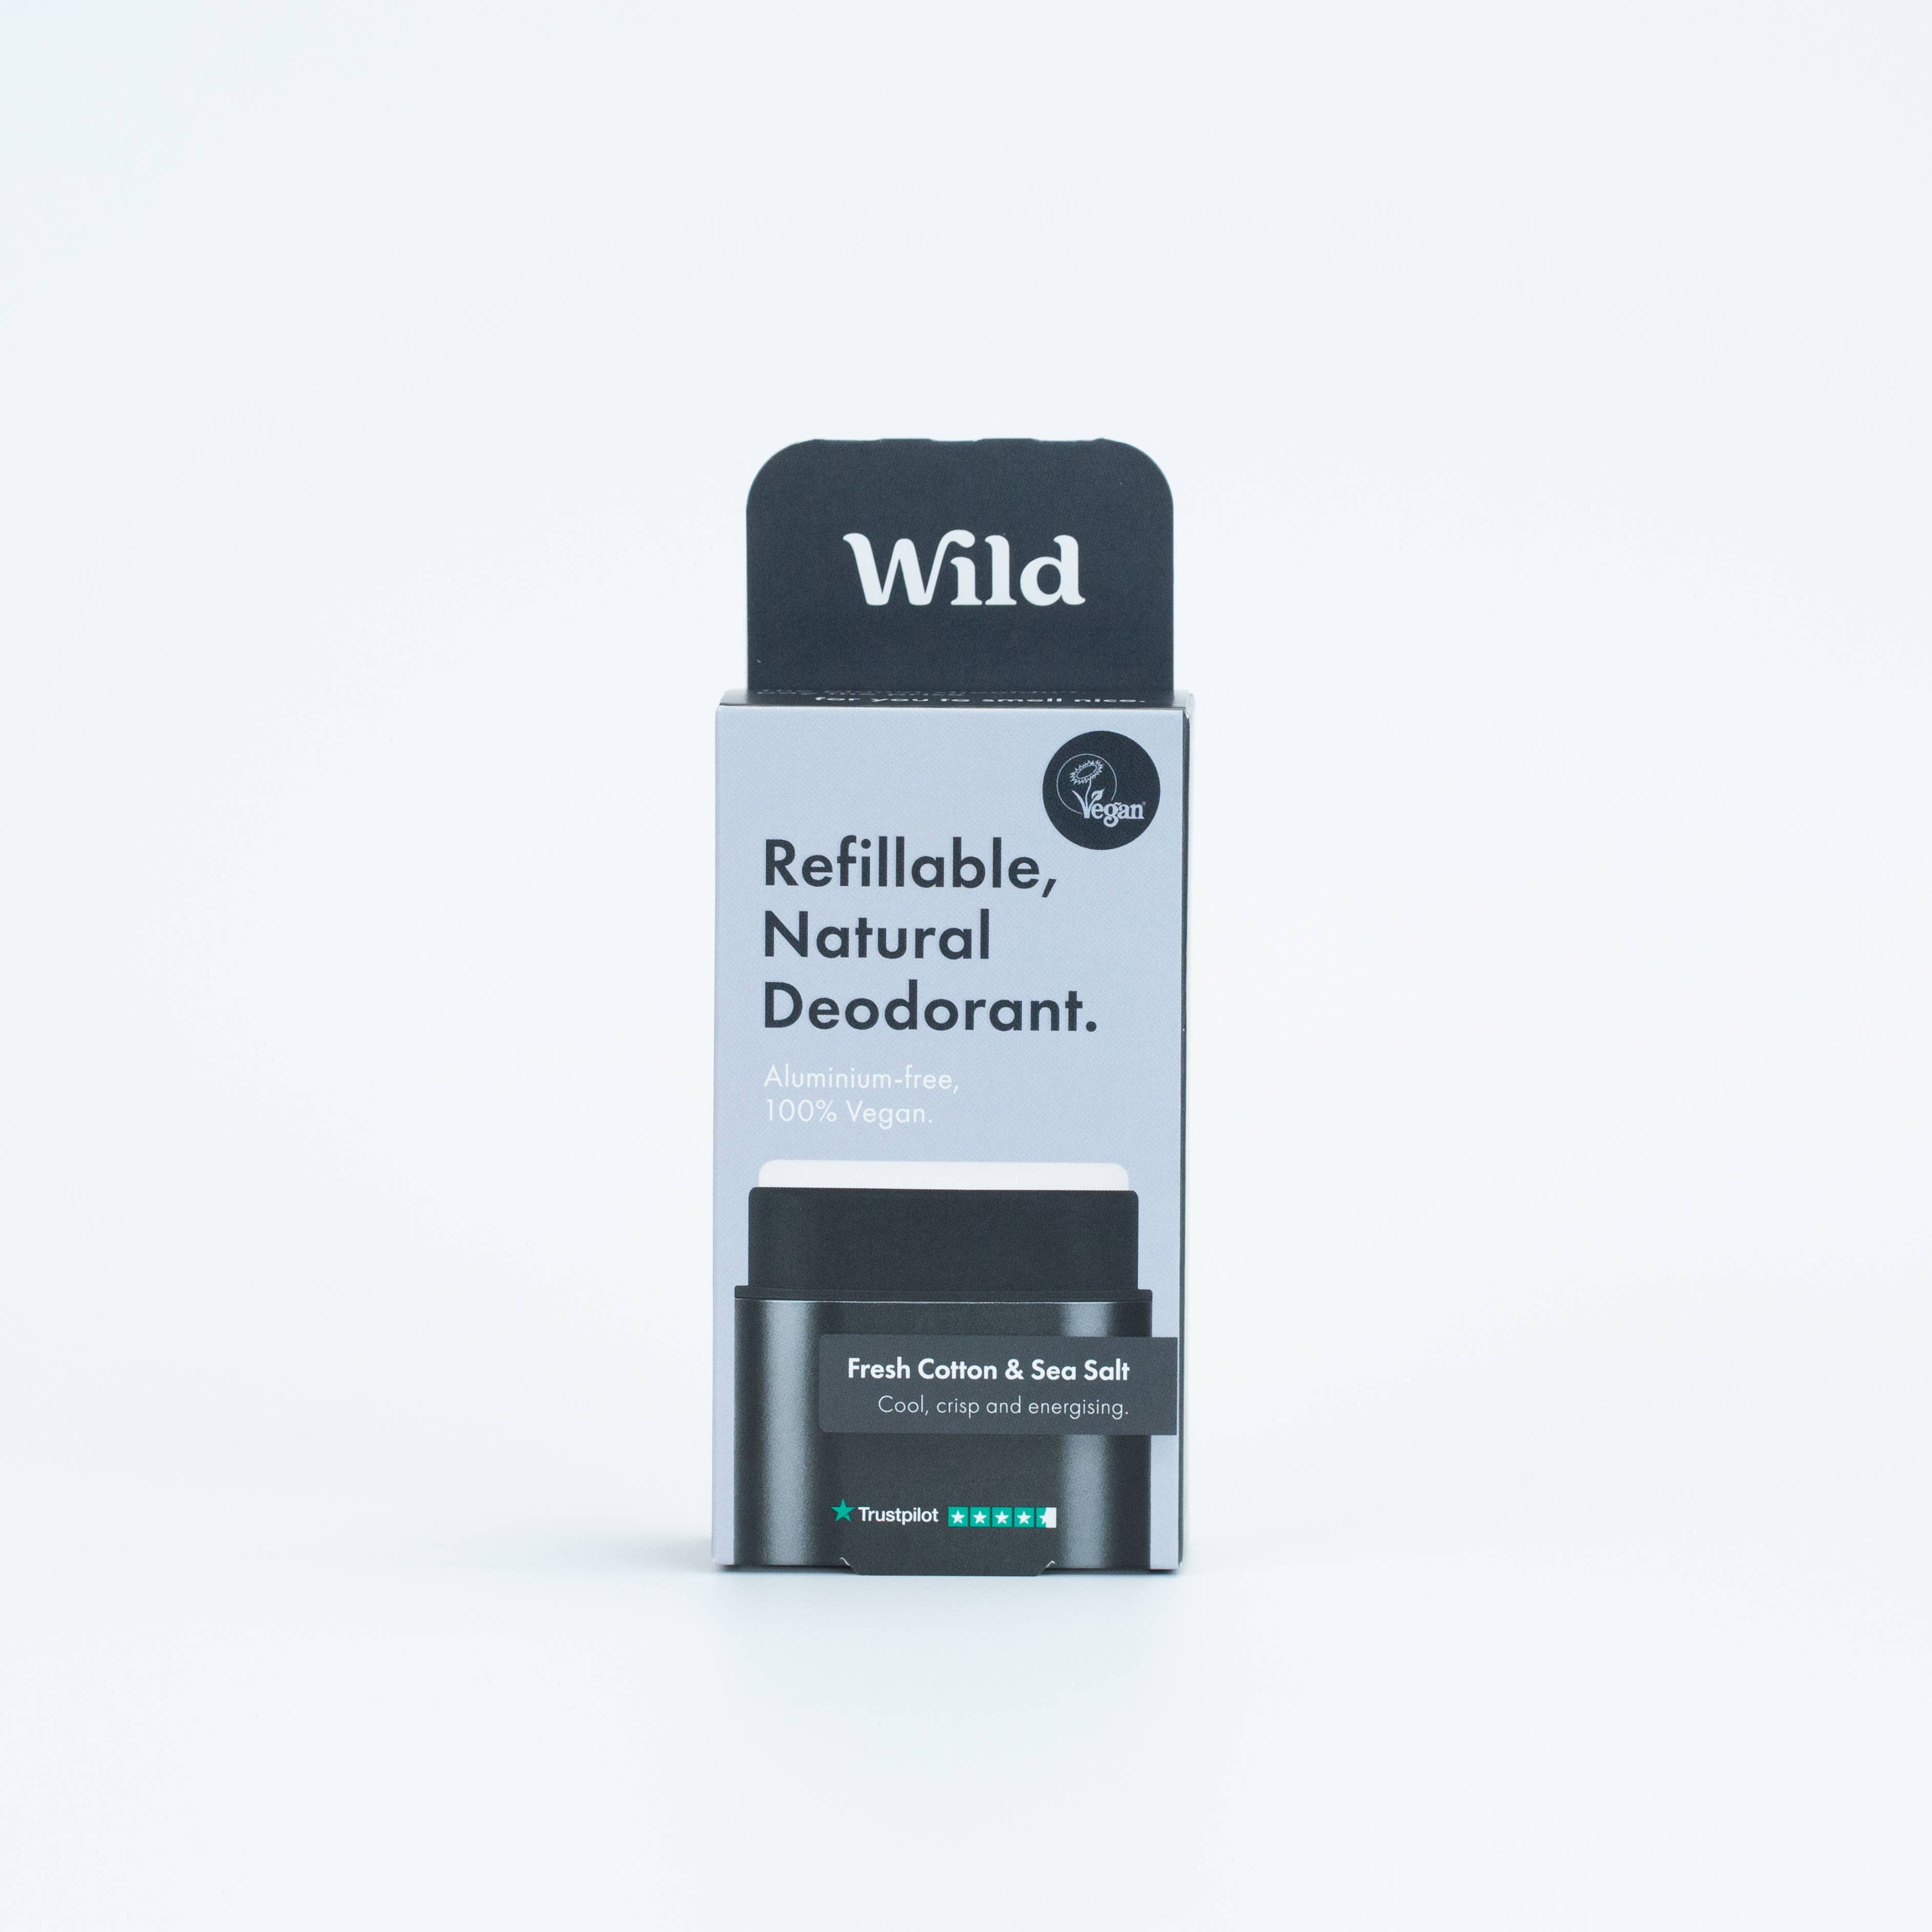 Wild Men's Fresh Cotton & Sea Salt Refillable Deodorant